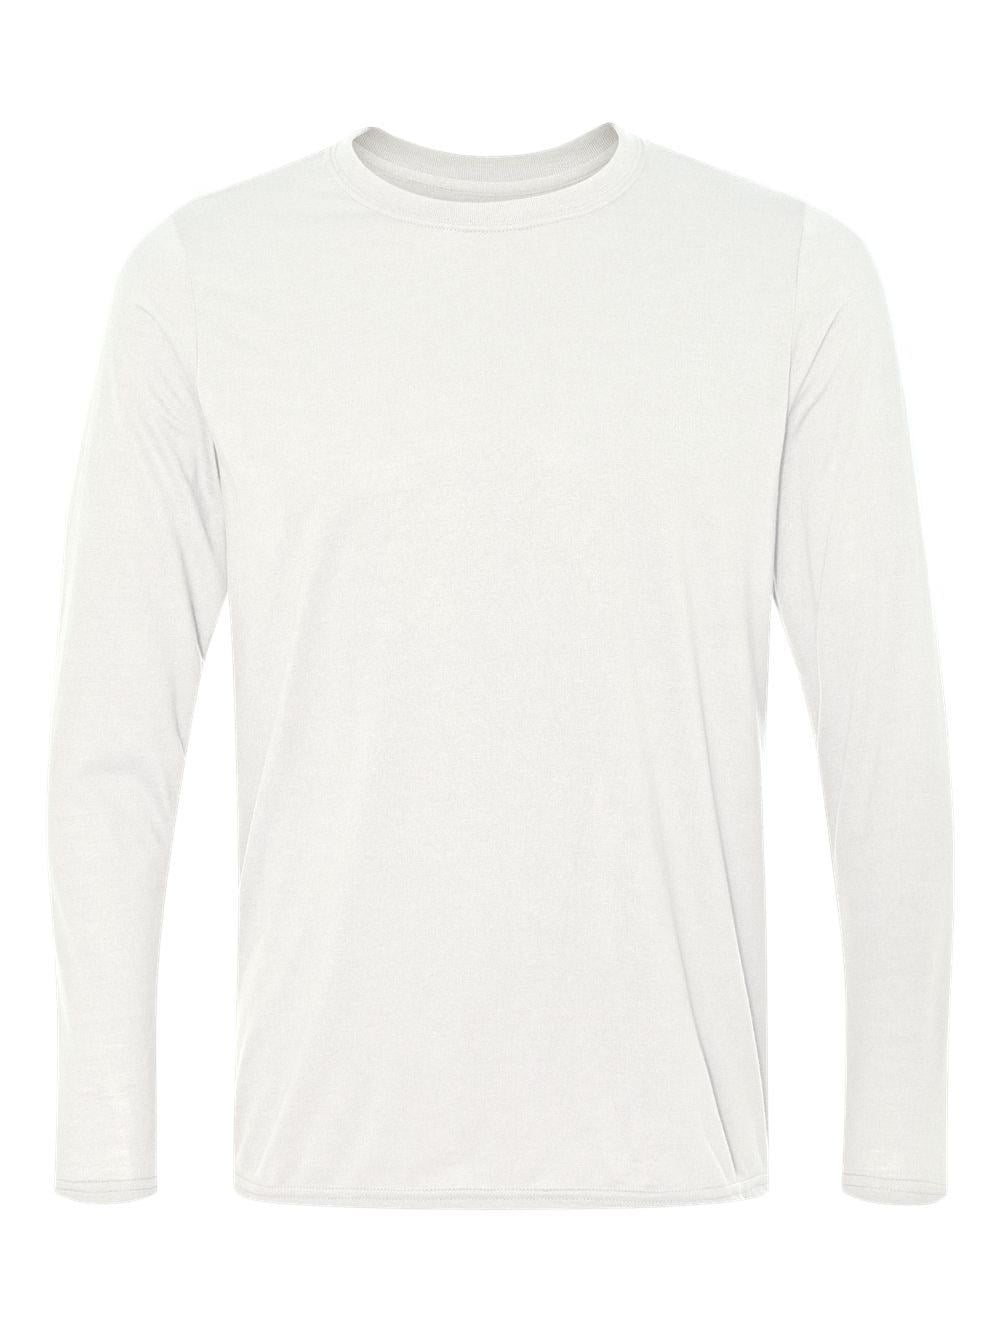 Gildan - Performance Long Sleeve T-Shirt - 42400 - White - Size: XL